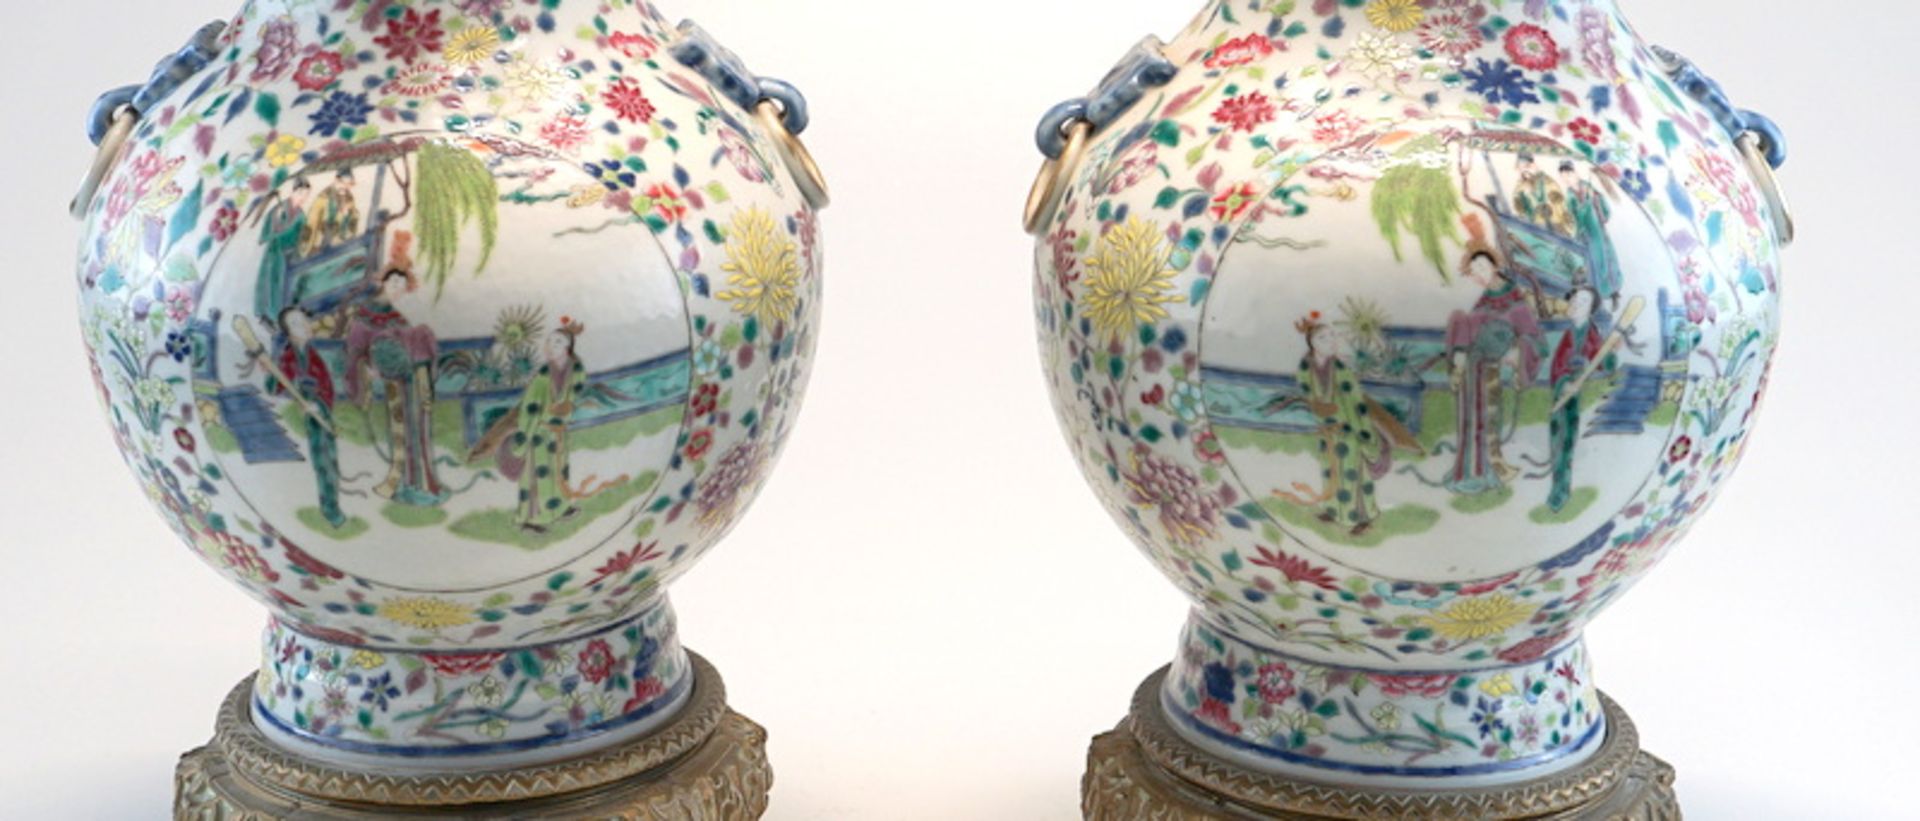 Pärchen Millefleur Vasen bronzemontiert China Kangxi Marke 18/19 Jh. - Bild 2 aus 5